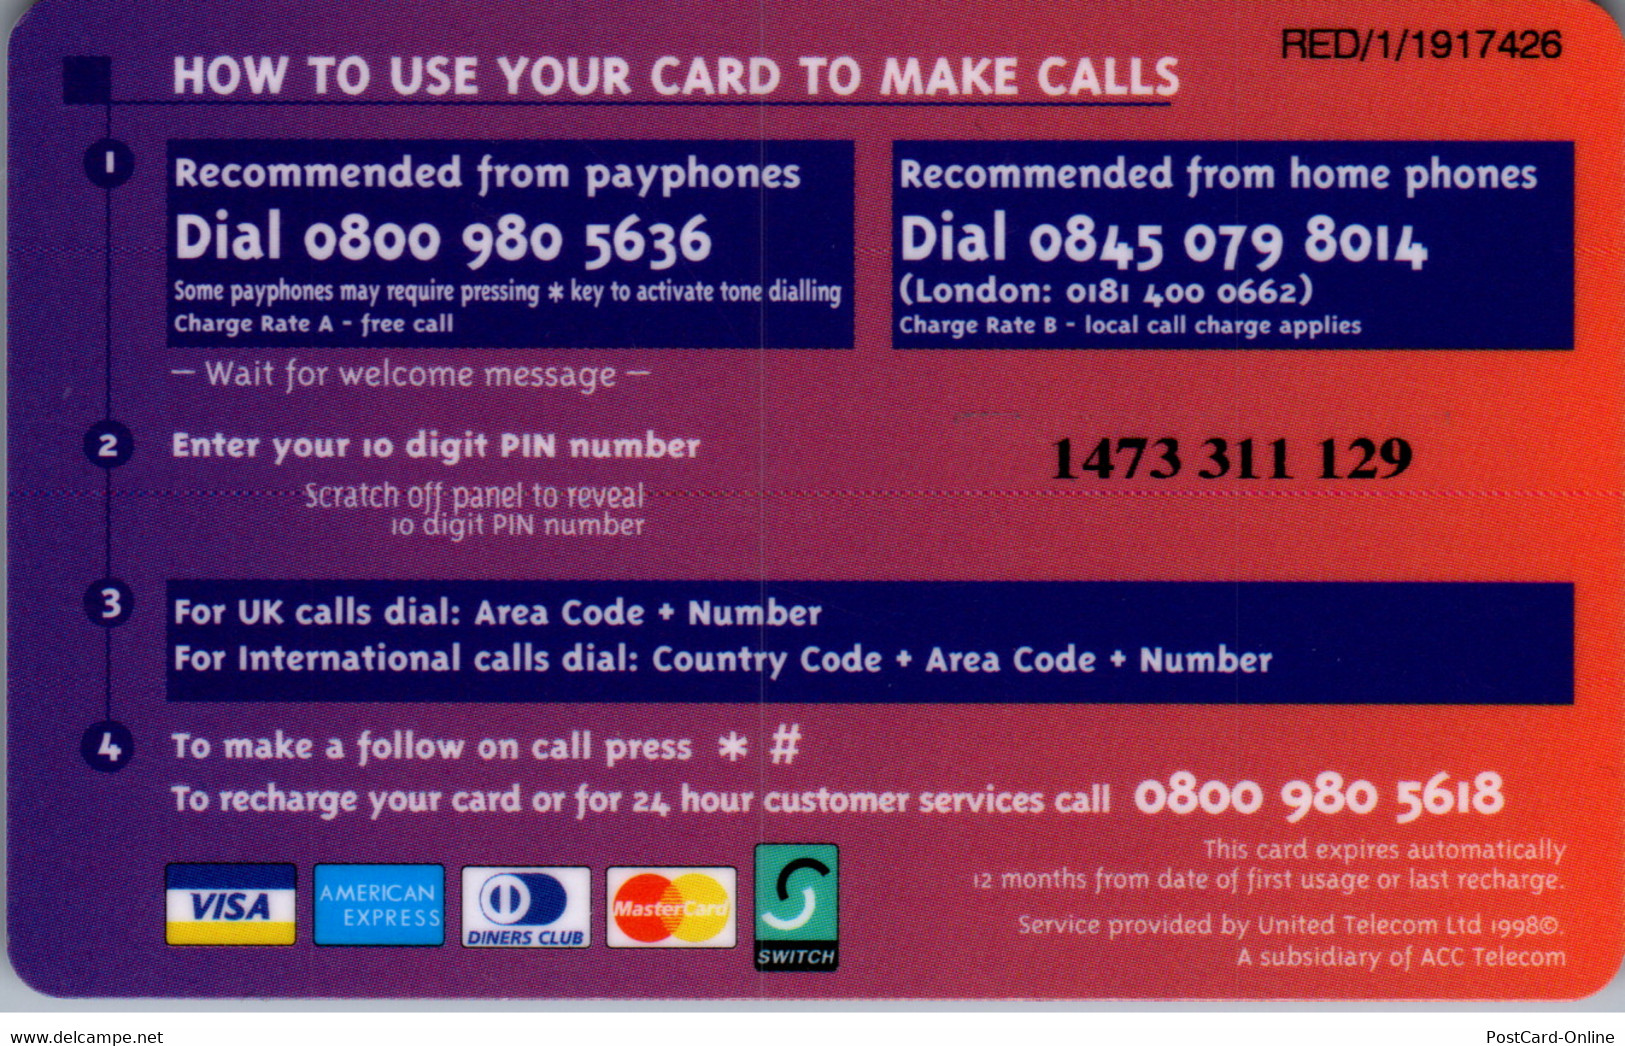 19159 - Großbritannien - United Telecom , Prepaid - BT Global Cards (Prepaid)